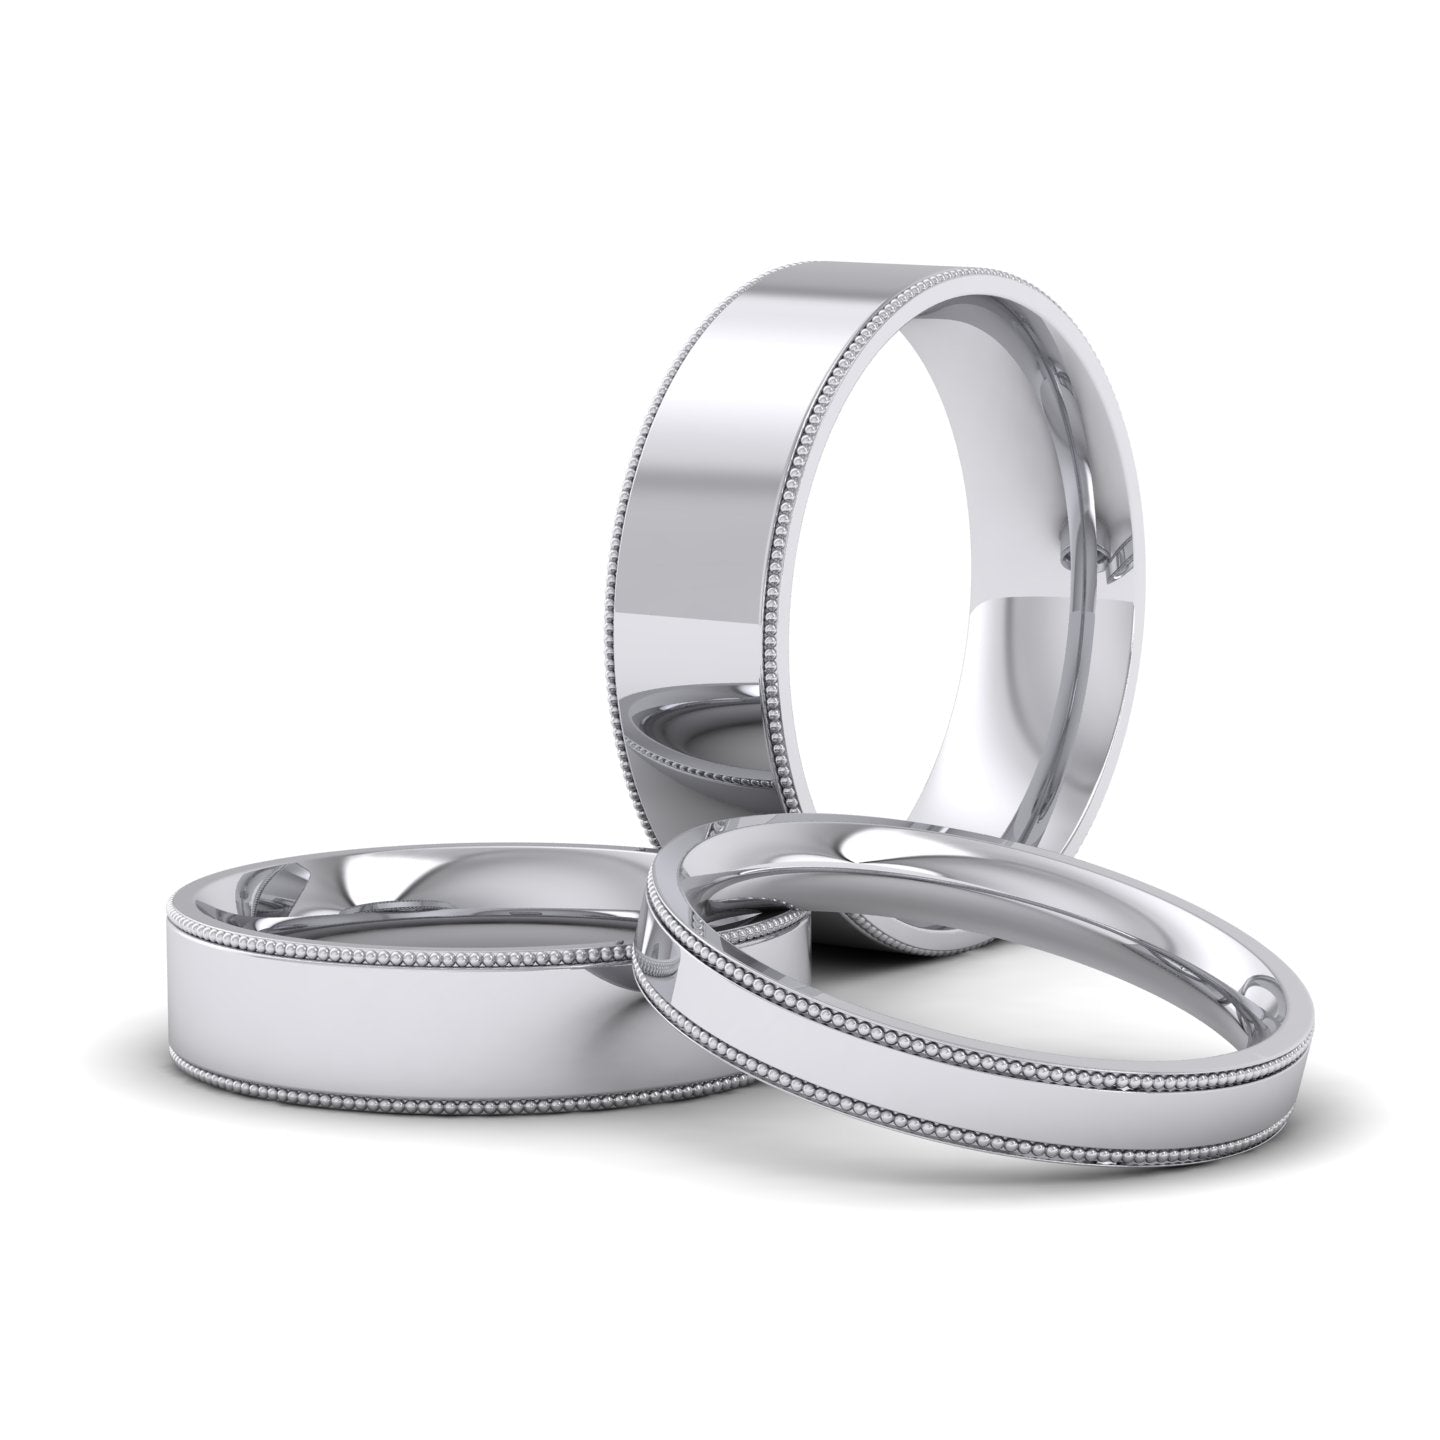 Millgrain Edge 500 Palladium 5mm Flat Comfort Fit Wedding Ring L